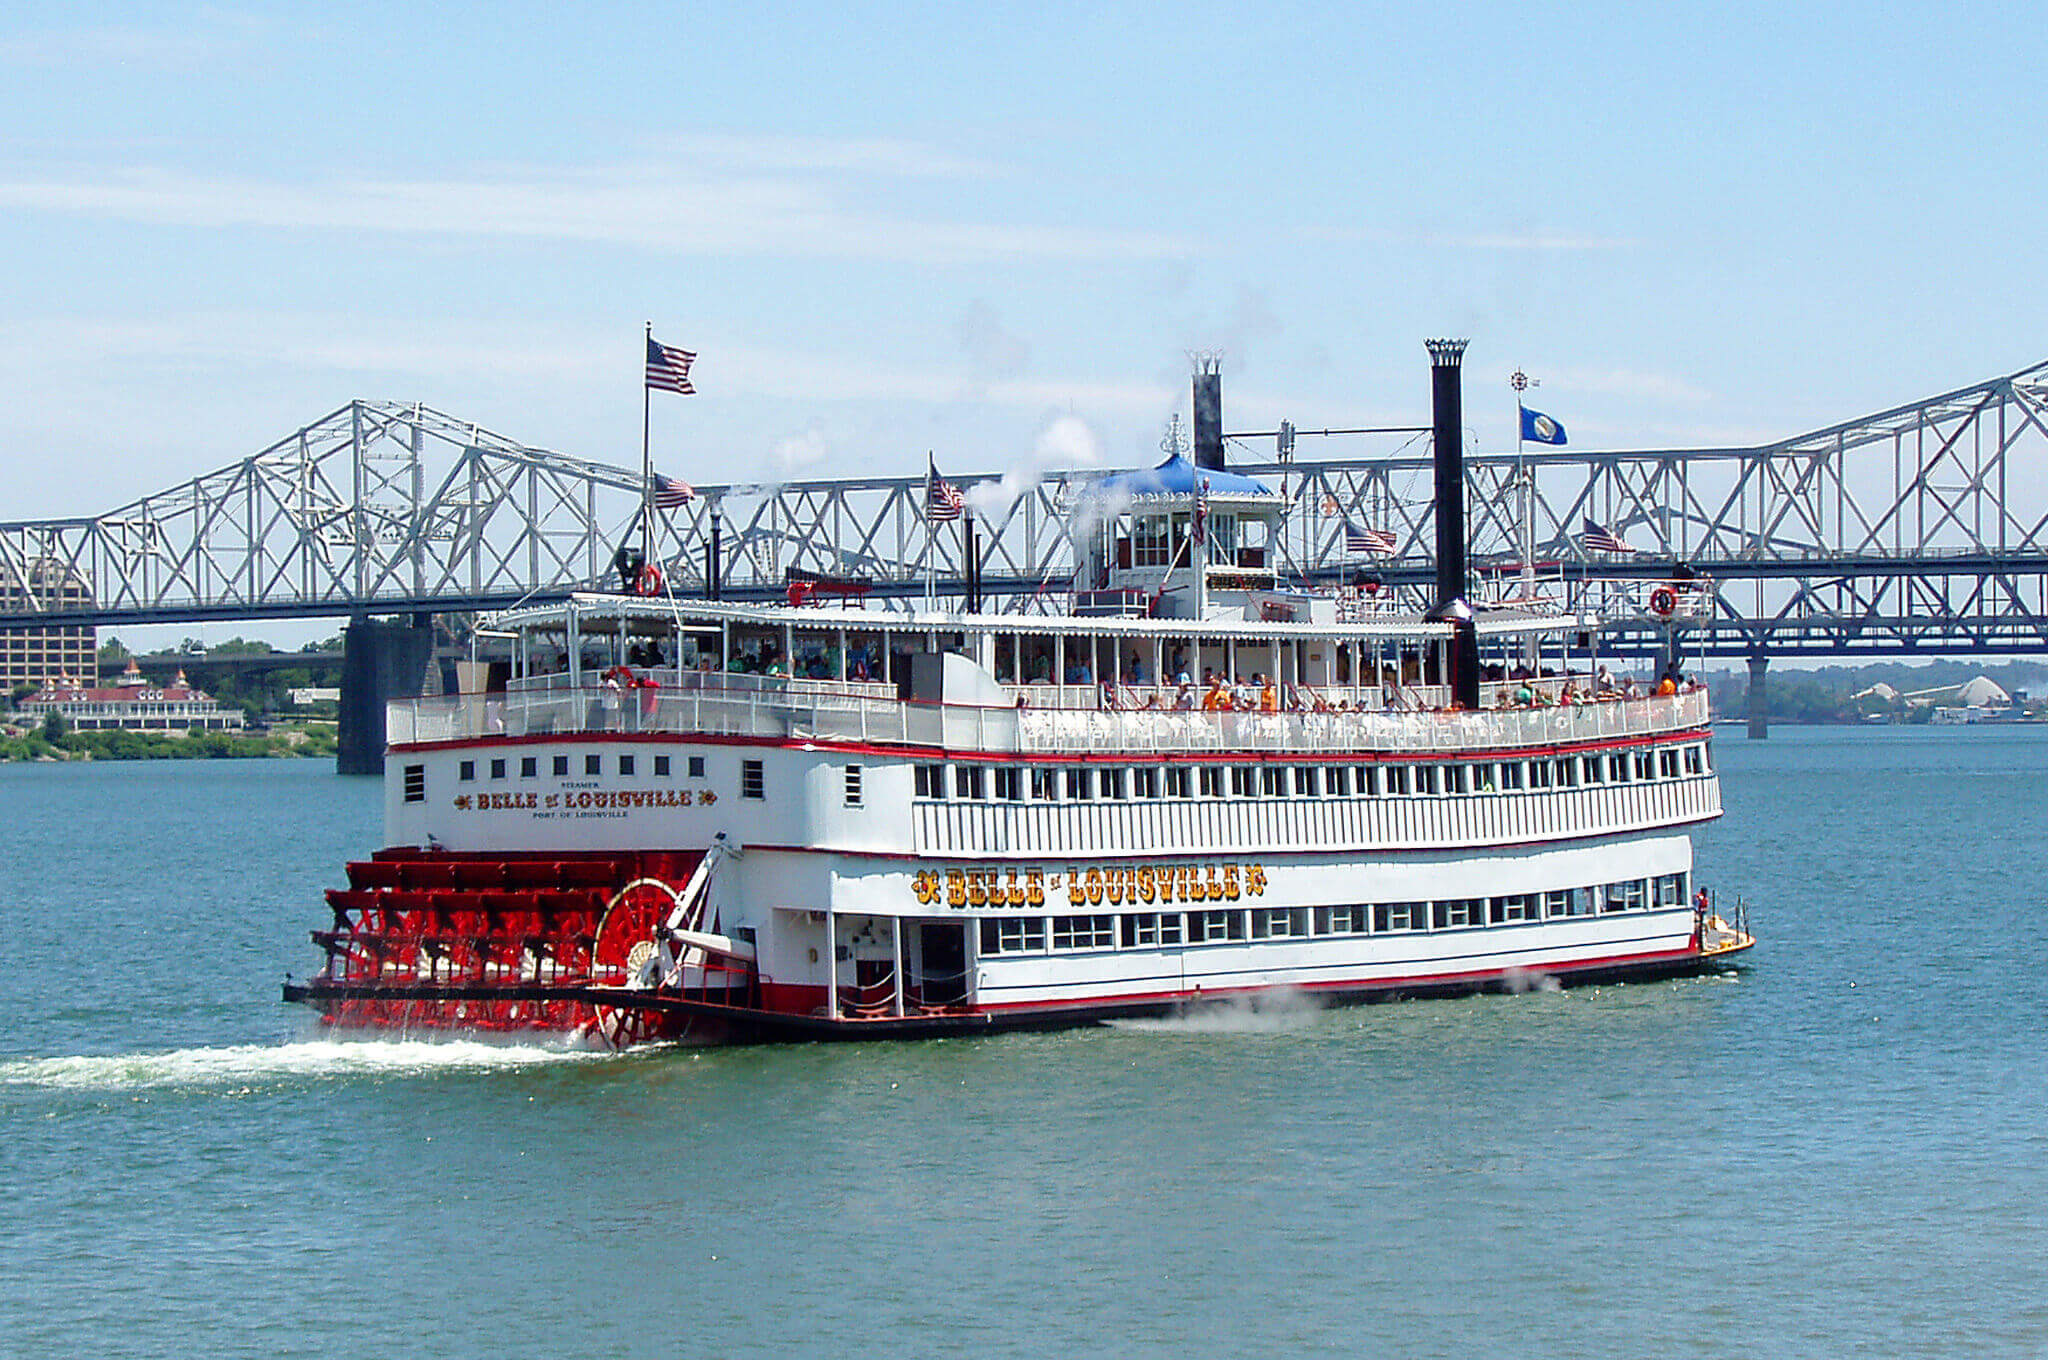 The Belle of Louisville (image from Belle of Louisville website)